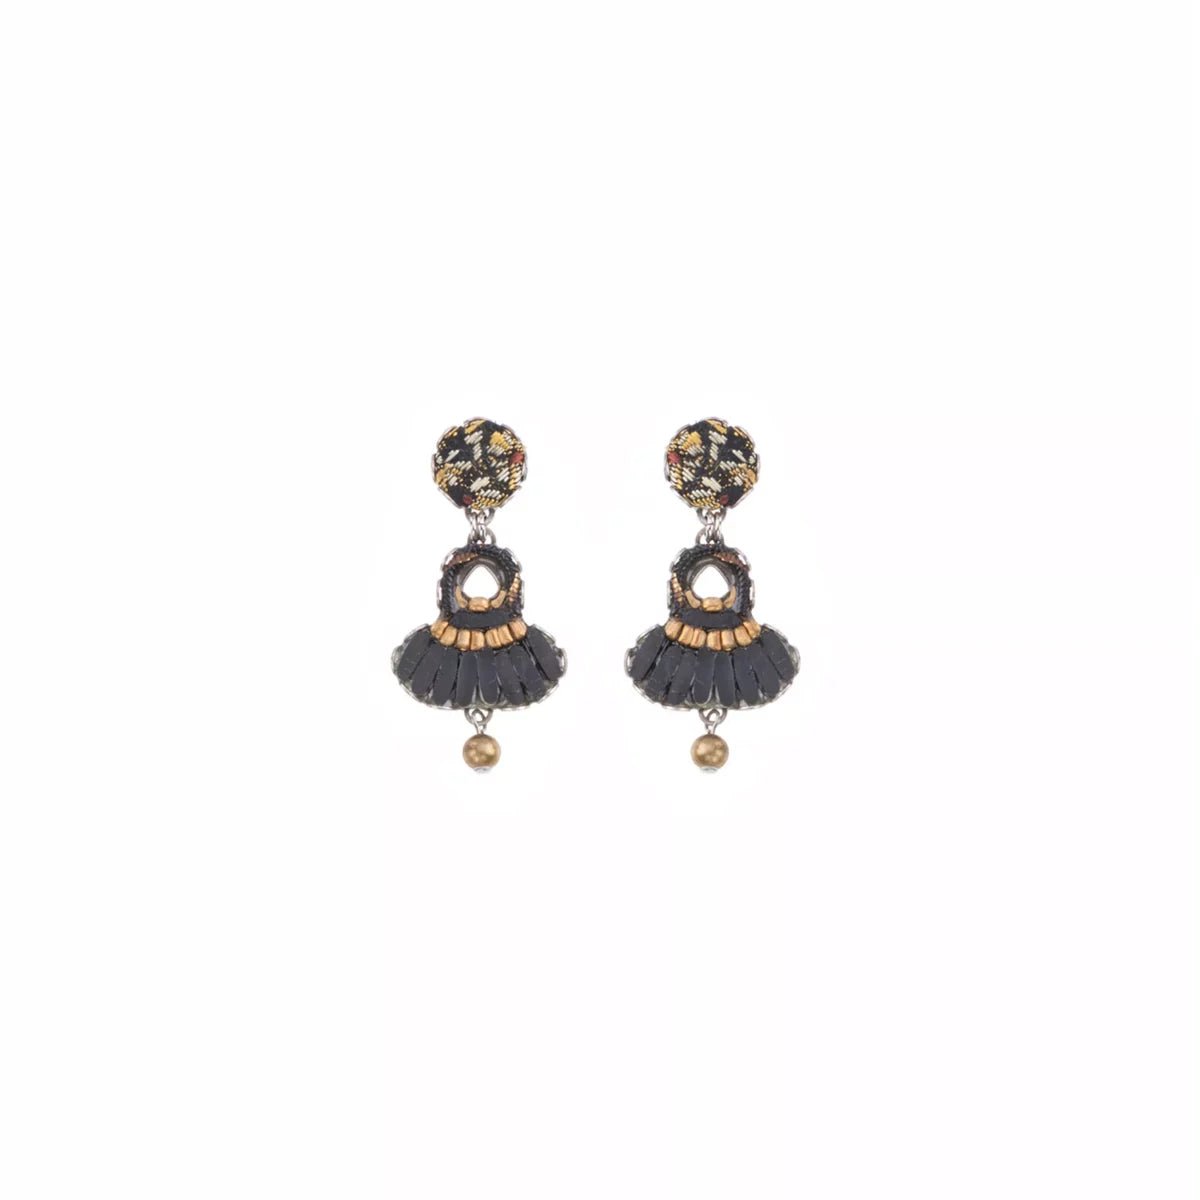 Royalty Mirtha Earrings - The Nancy Smillie Shop - Art, Jewellery & Designer Gifts Glasgow